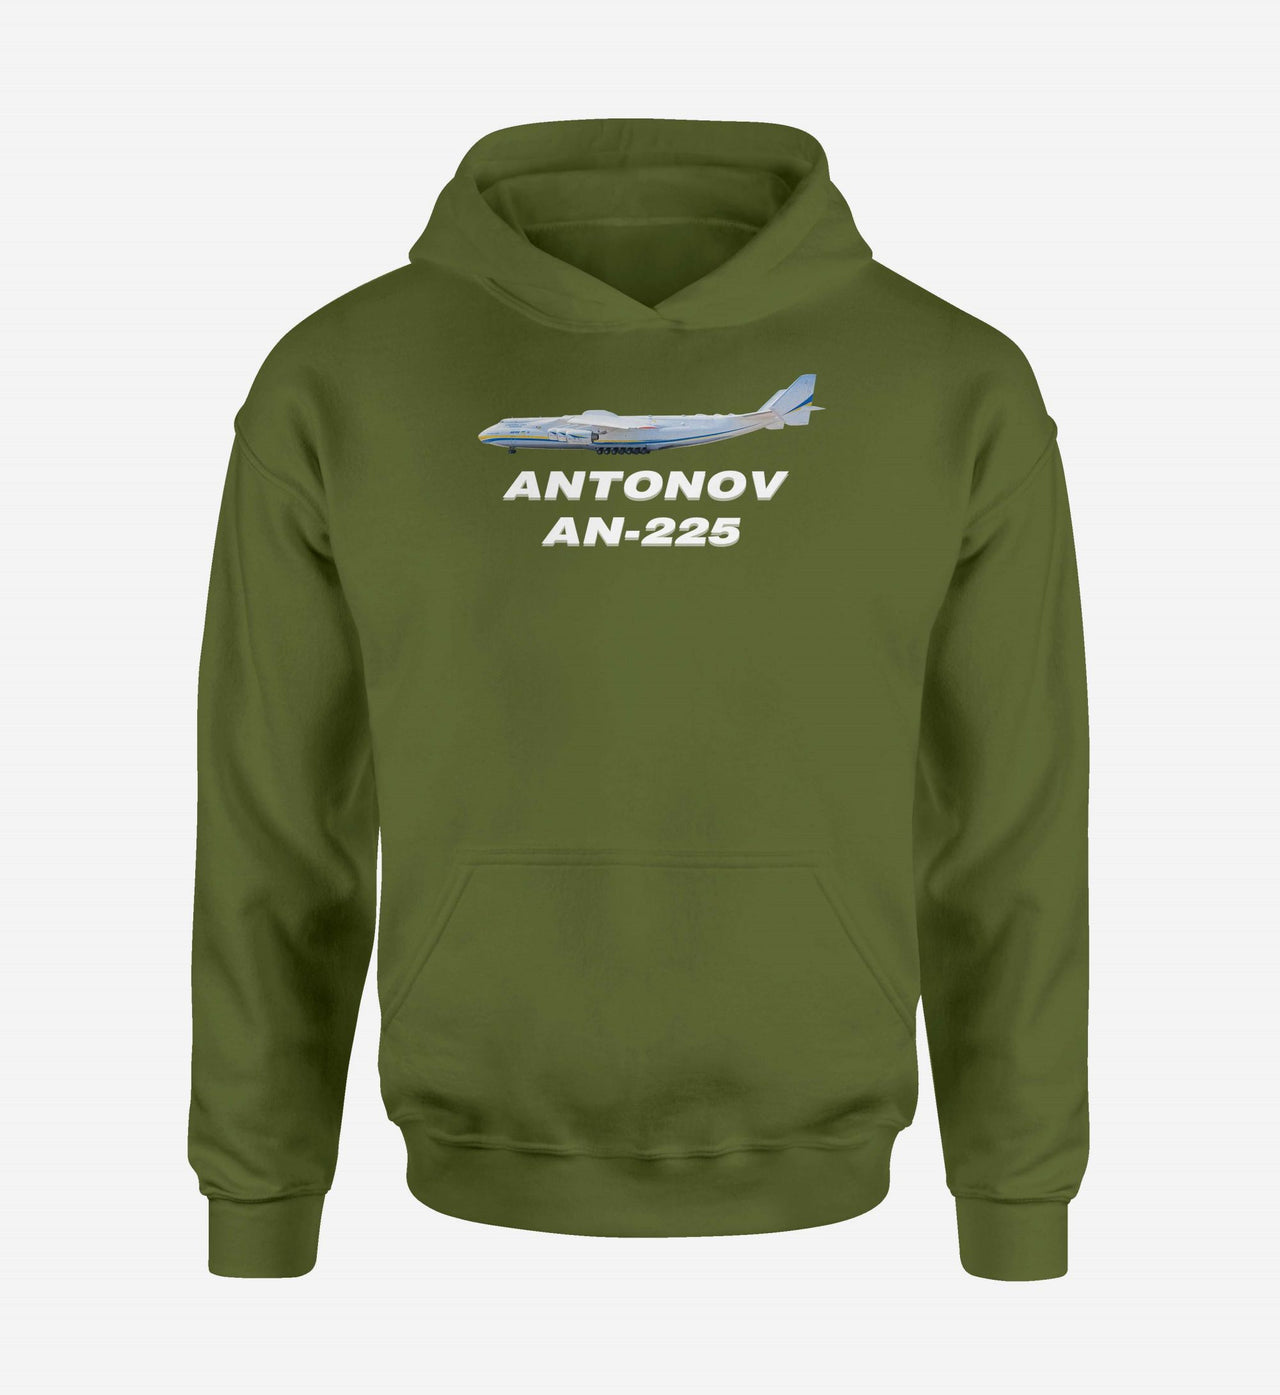 The Antonov AN-225 Designed Hoodies